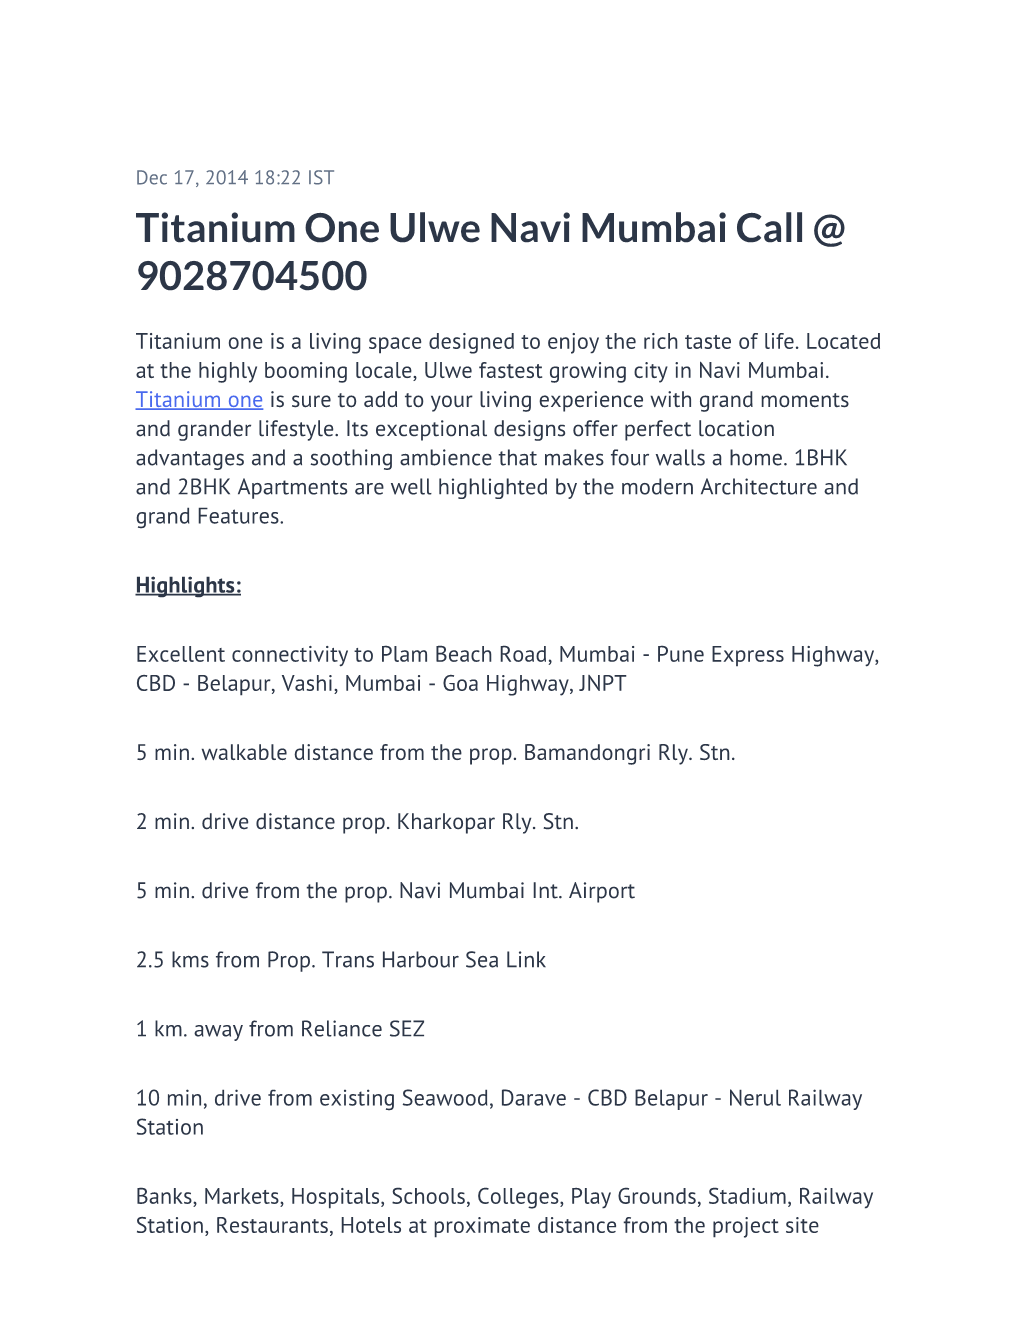 Titanium One Ulwe Navi Mumbai Call @ 9028704500